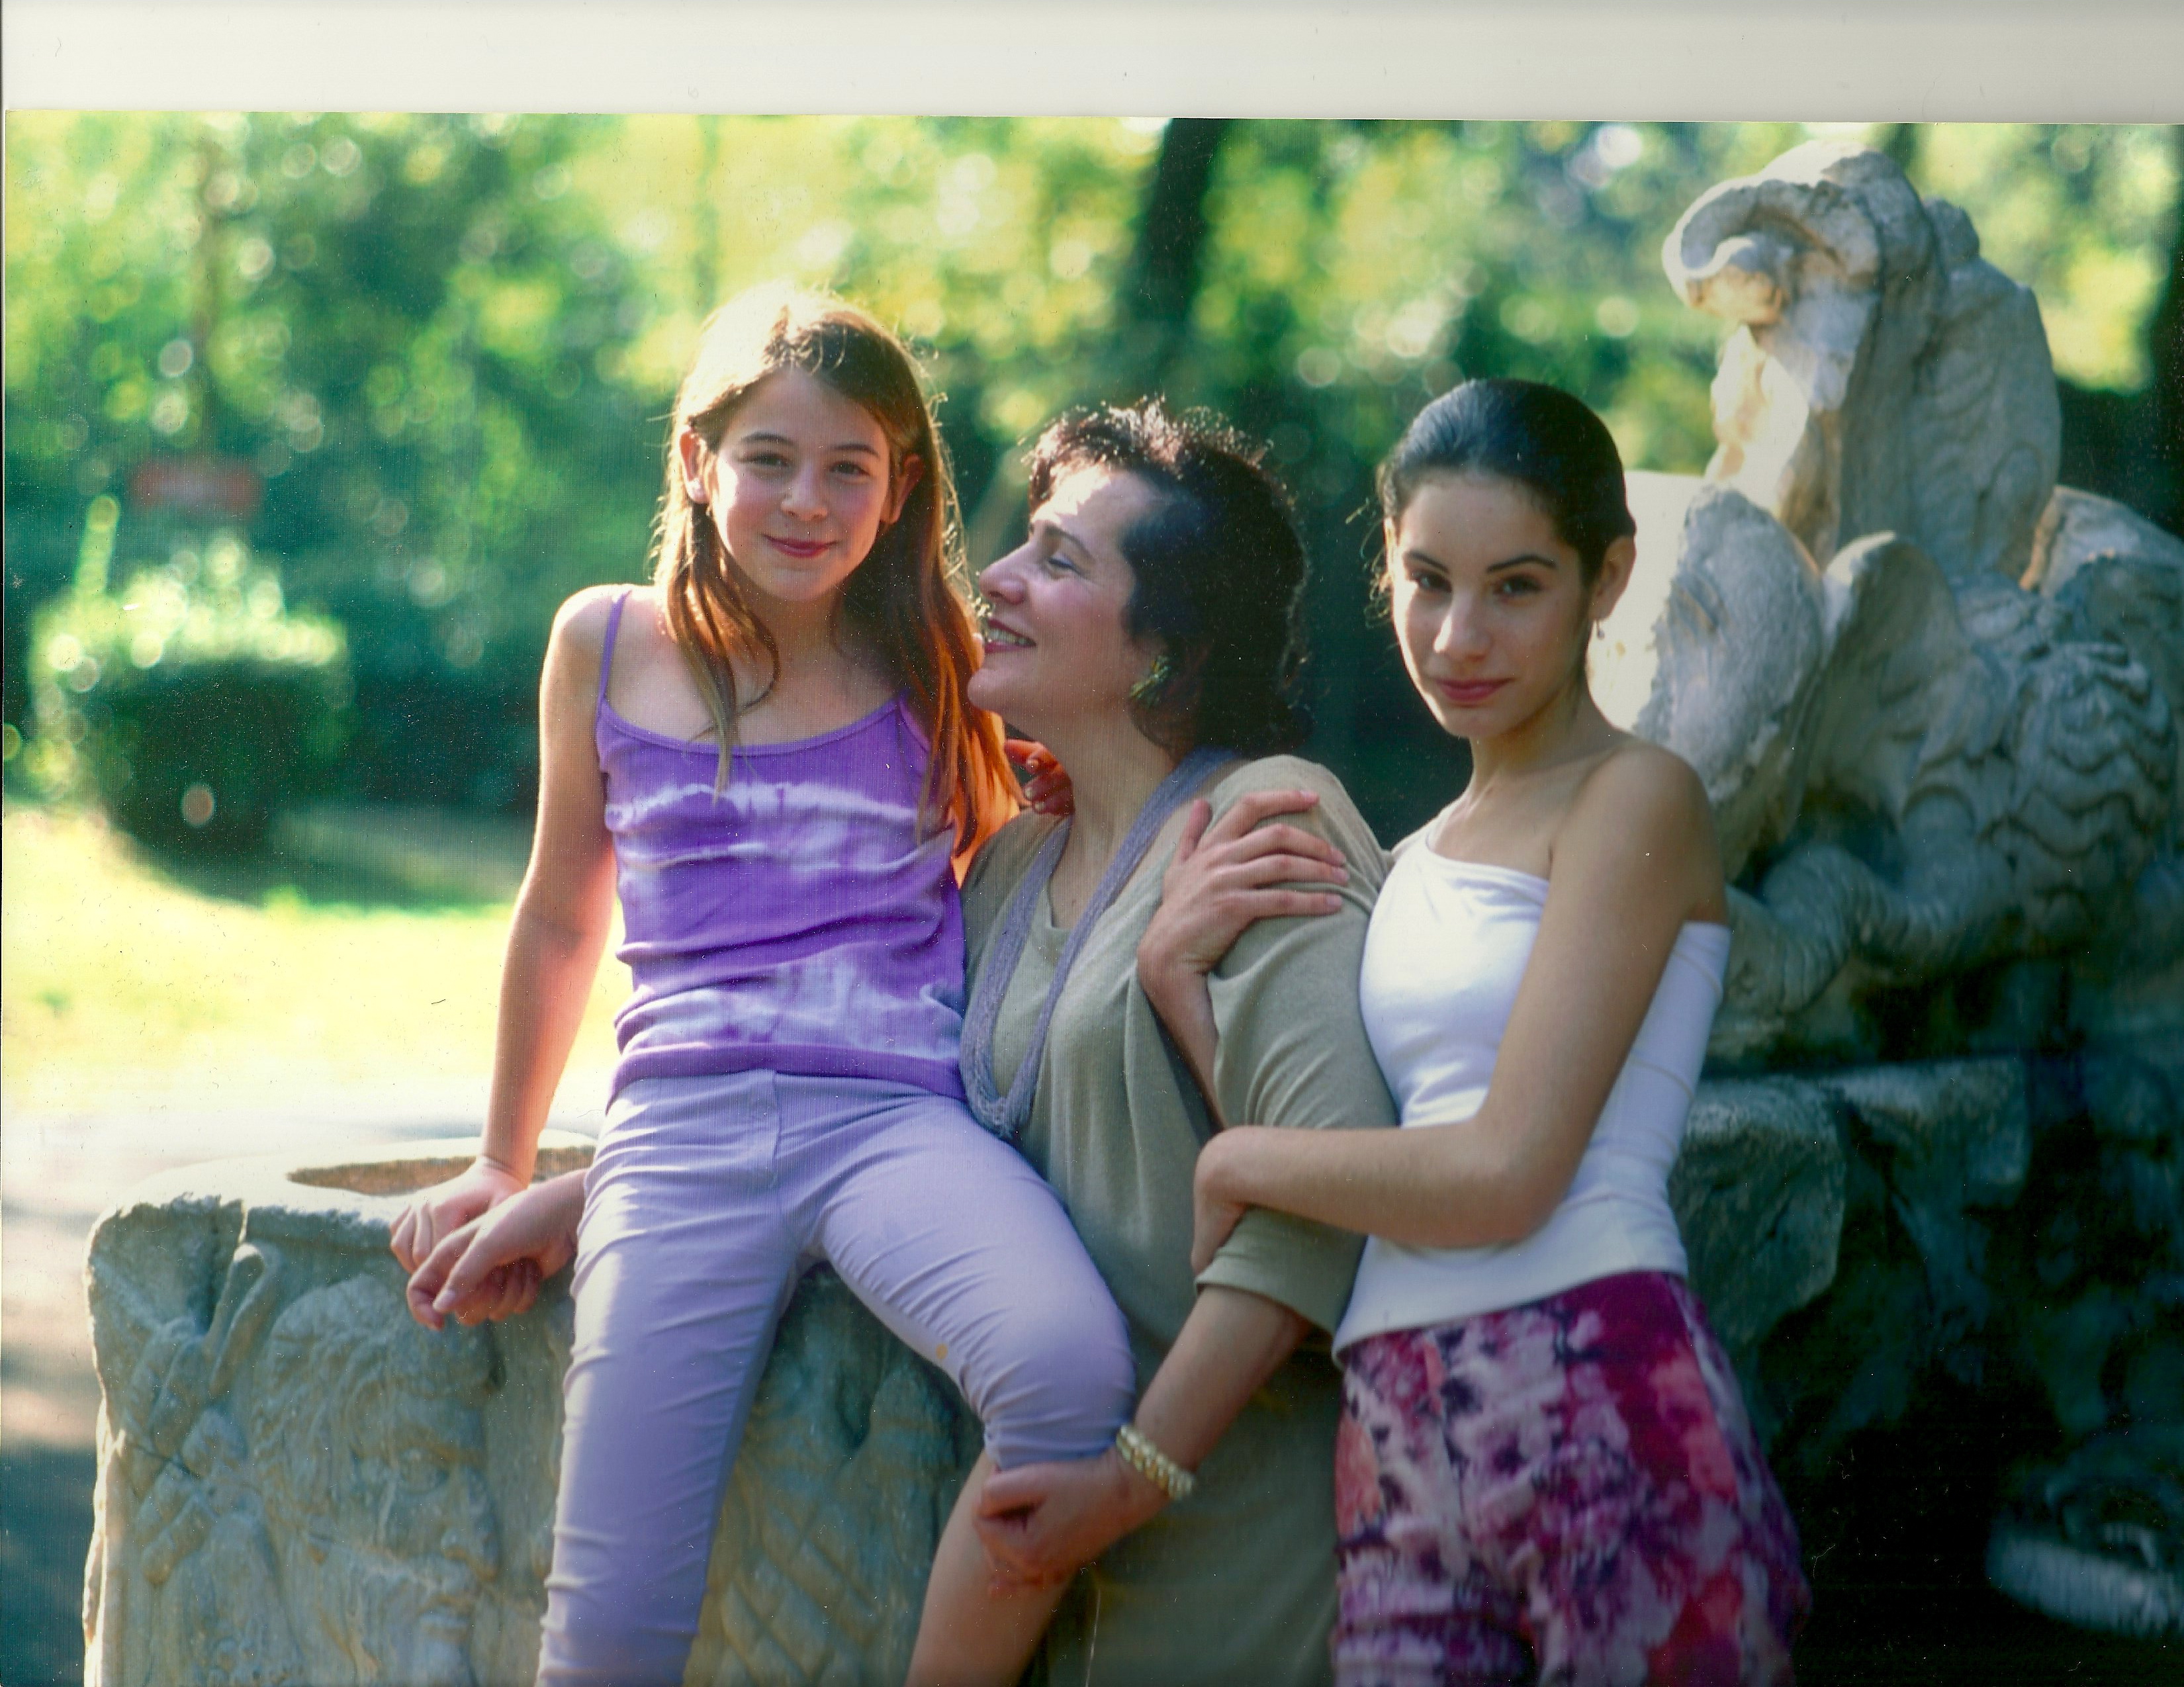 With Celina and Gabriella in Villa Borghese, Rome, 1998. | Credit: Paolo Destefanis